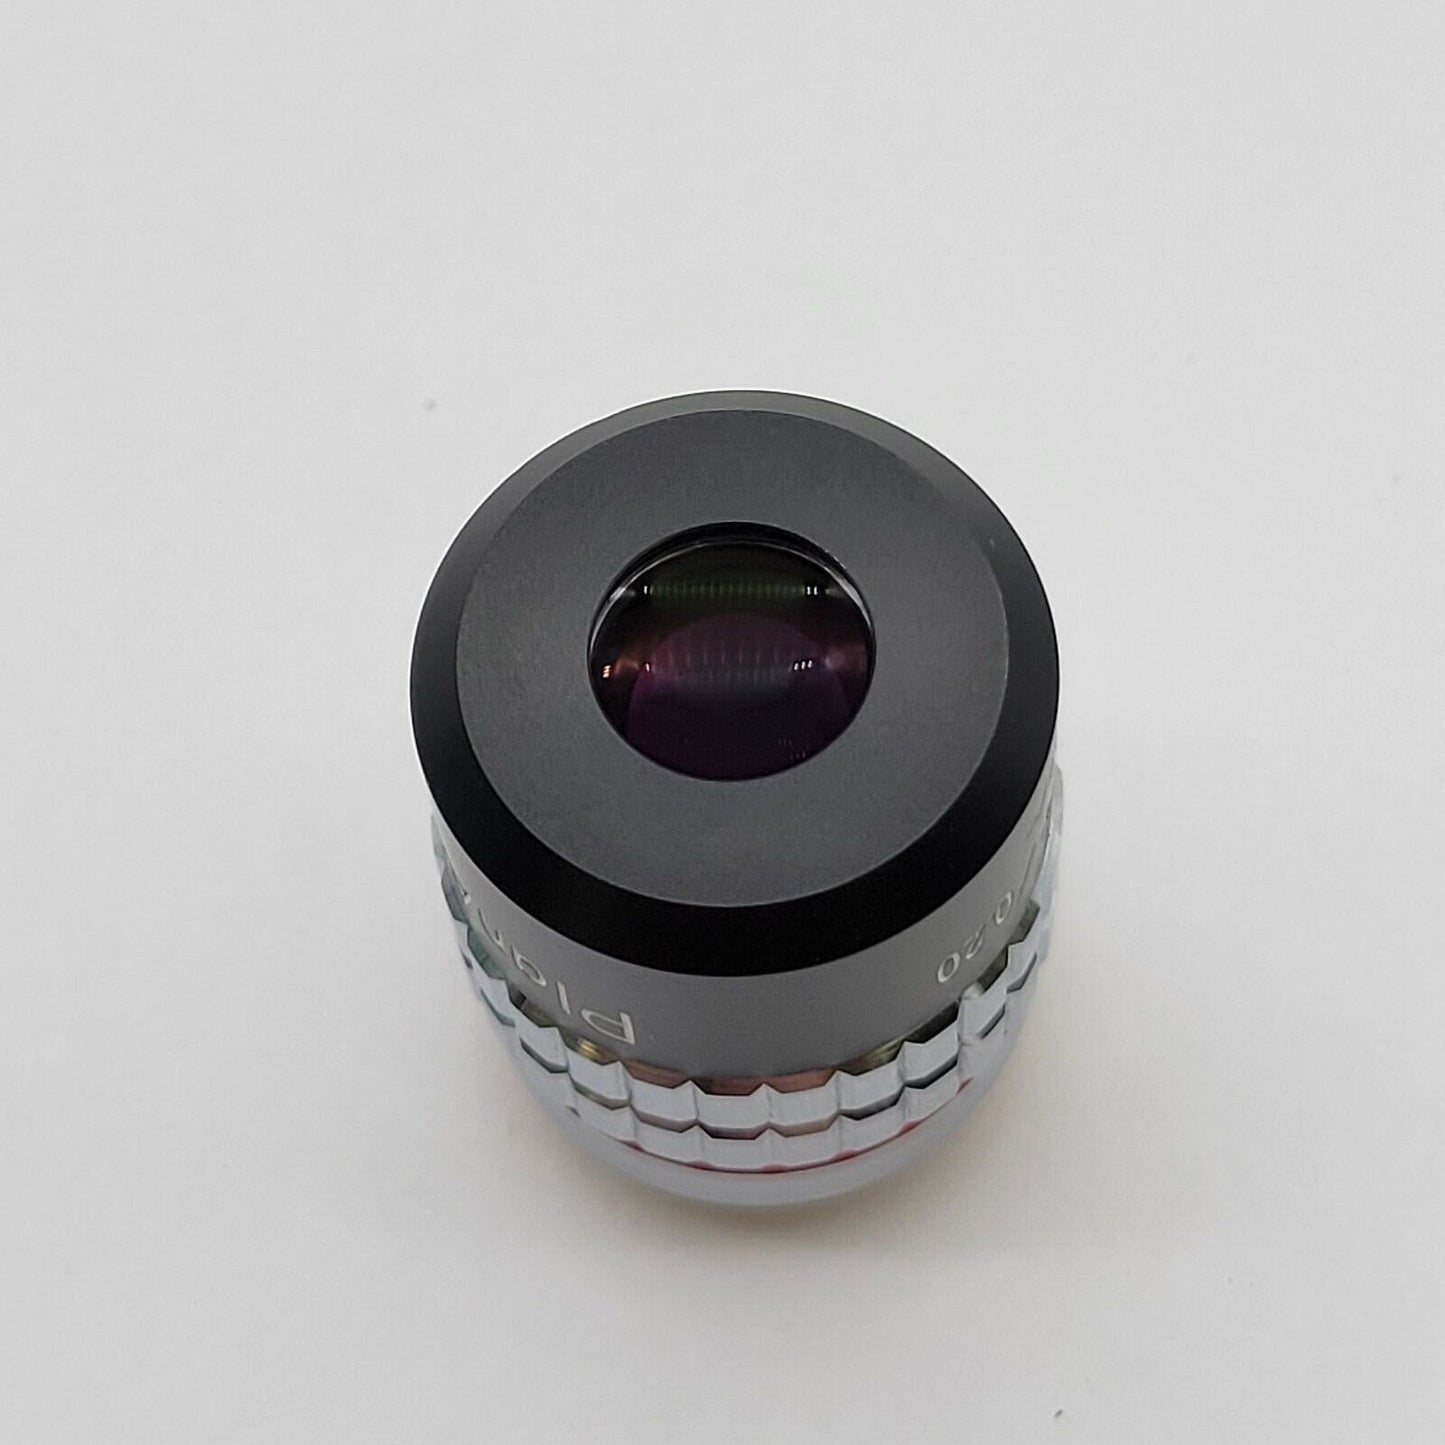 Nikon Microscope Objective PlanApo 4x 160/- Plan Apo - microscopemarketplace